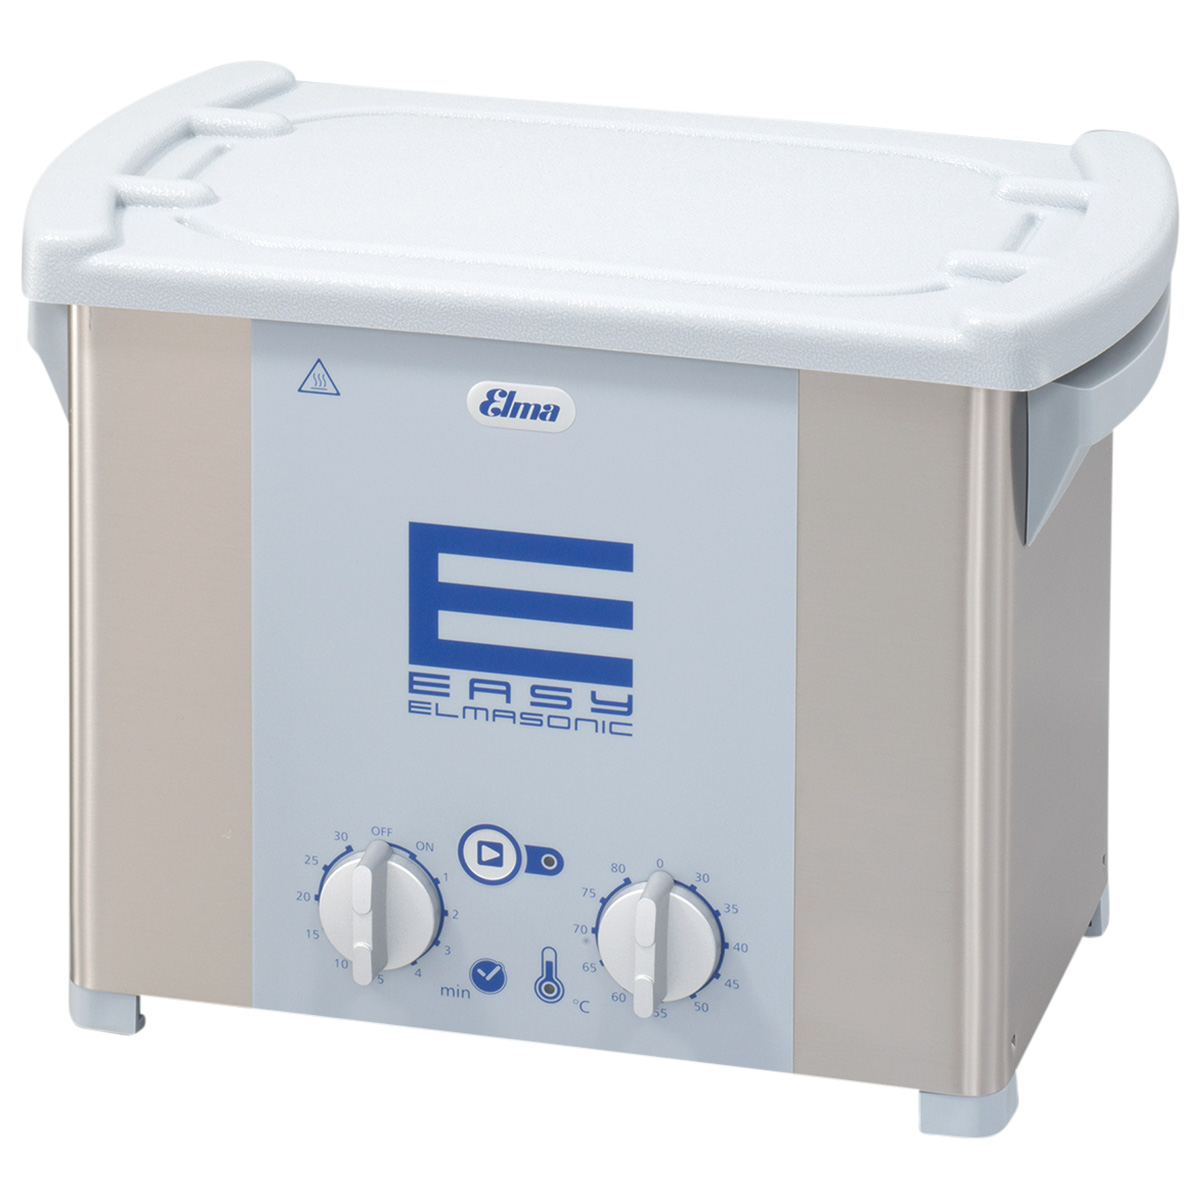 Elmasonic Easy 30H appareil a nettoyer ultrasons, avec chauffage, 220 - 240 V